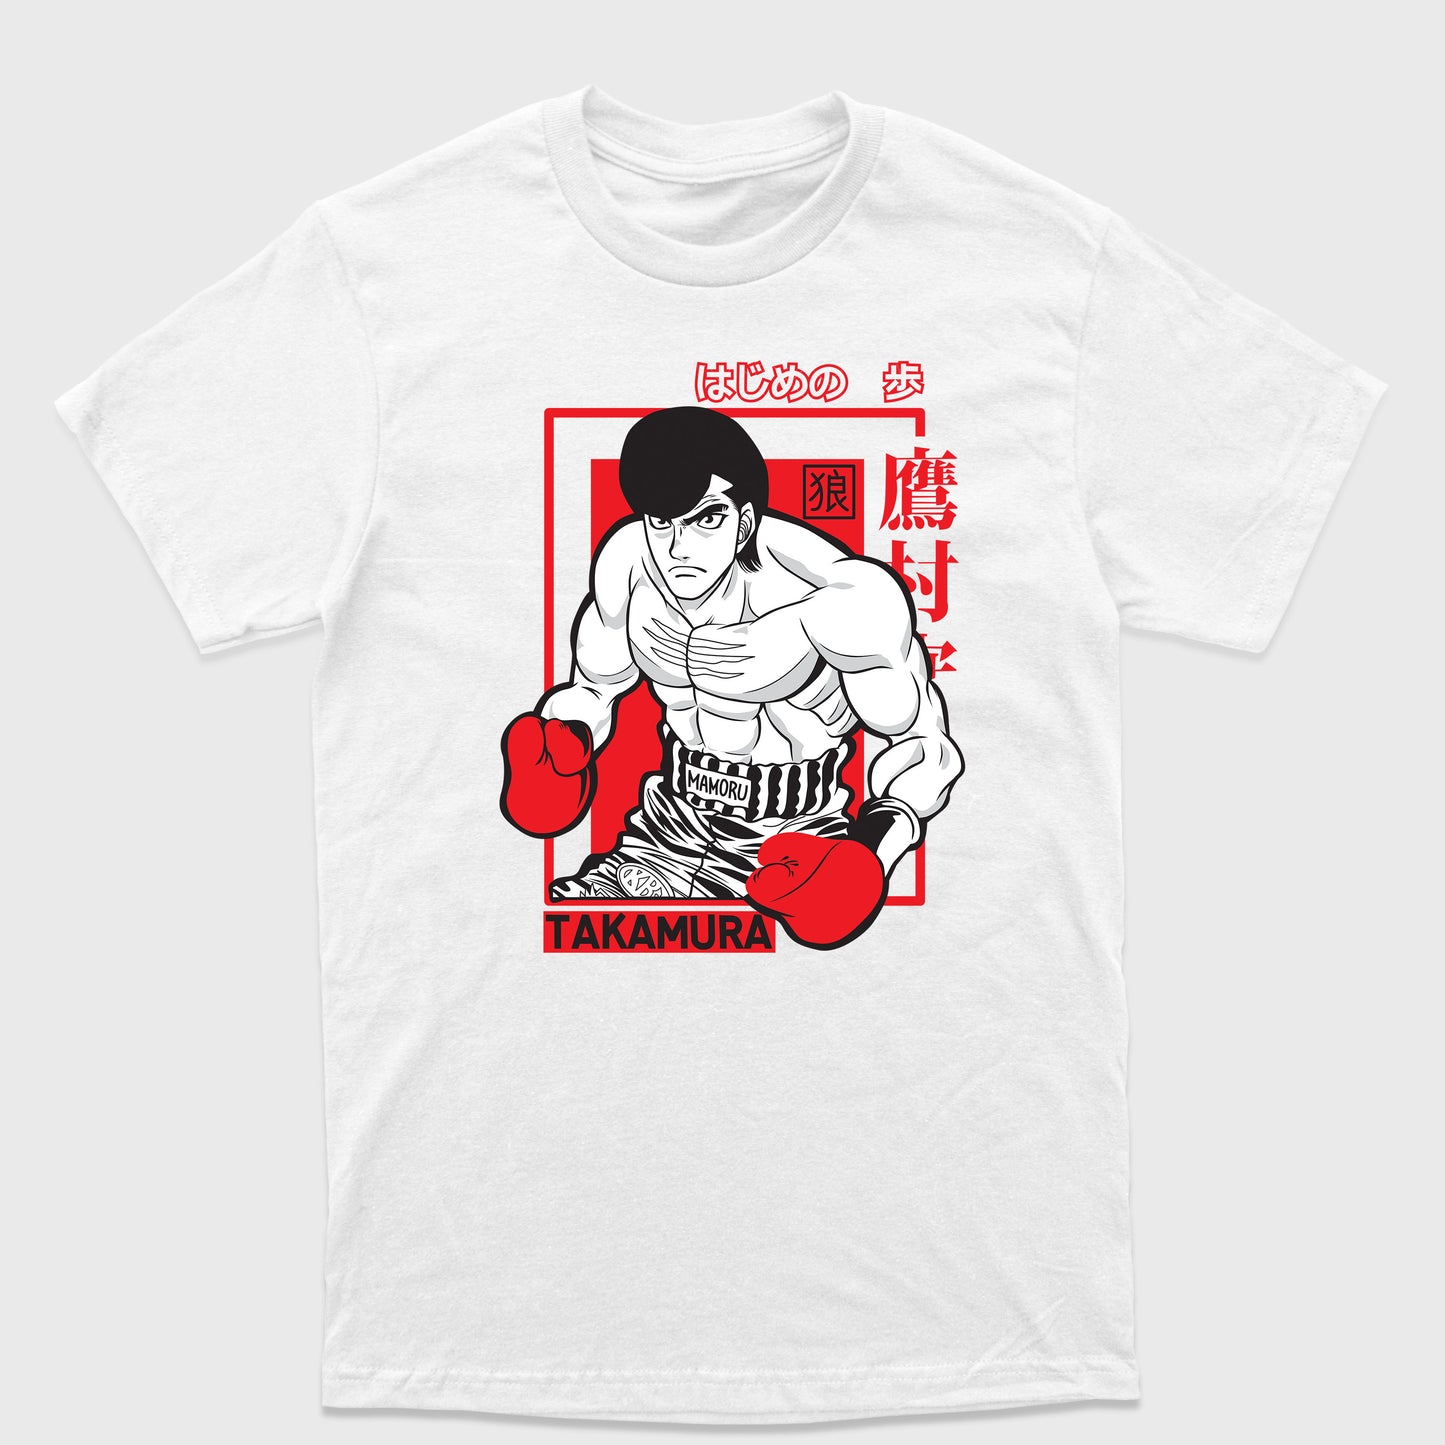 Camiseta Hajime no Ippo, Loja Atomic